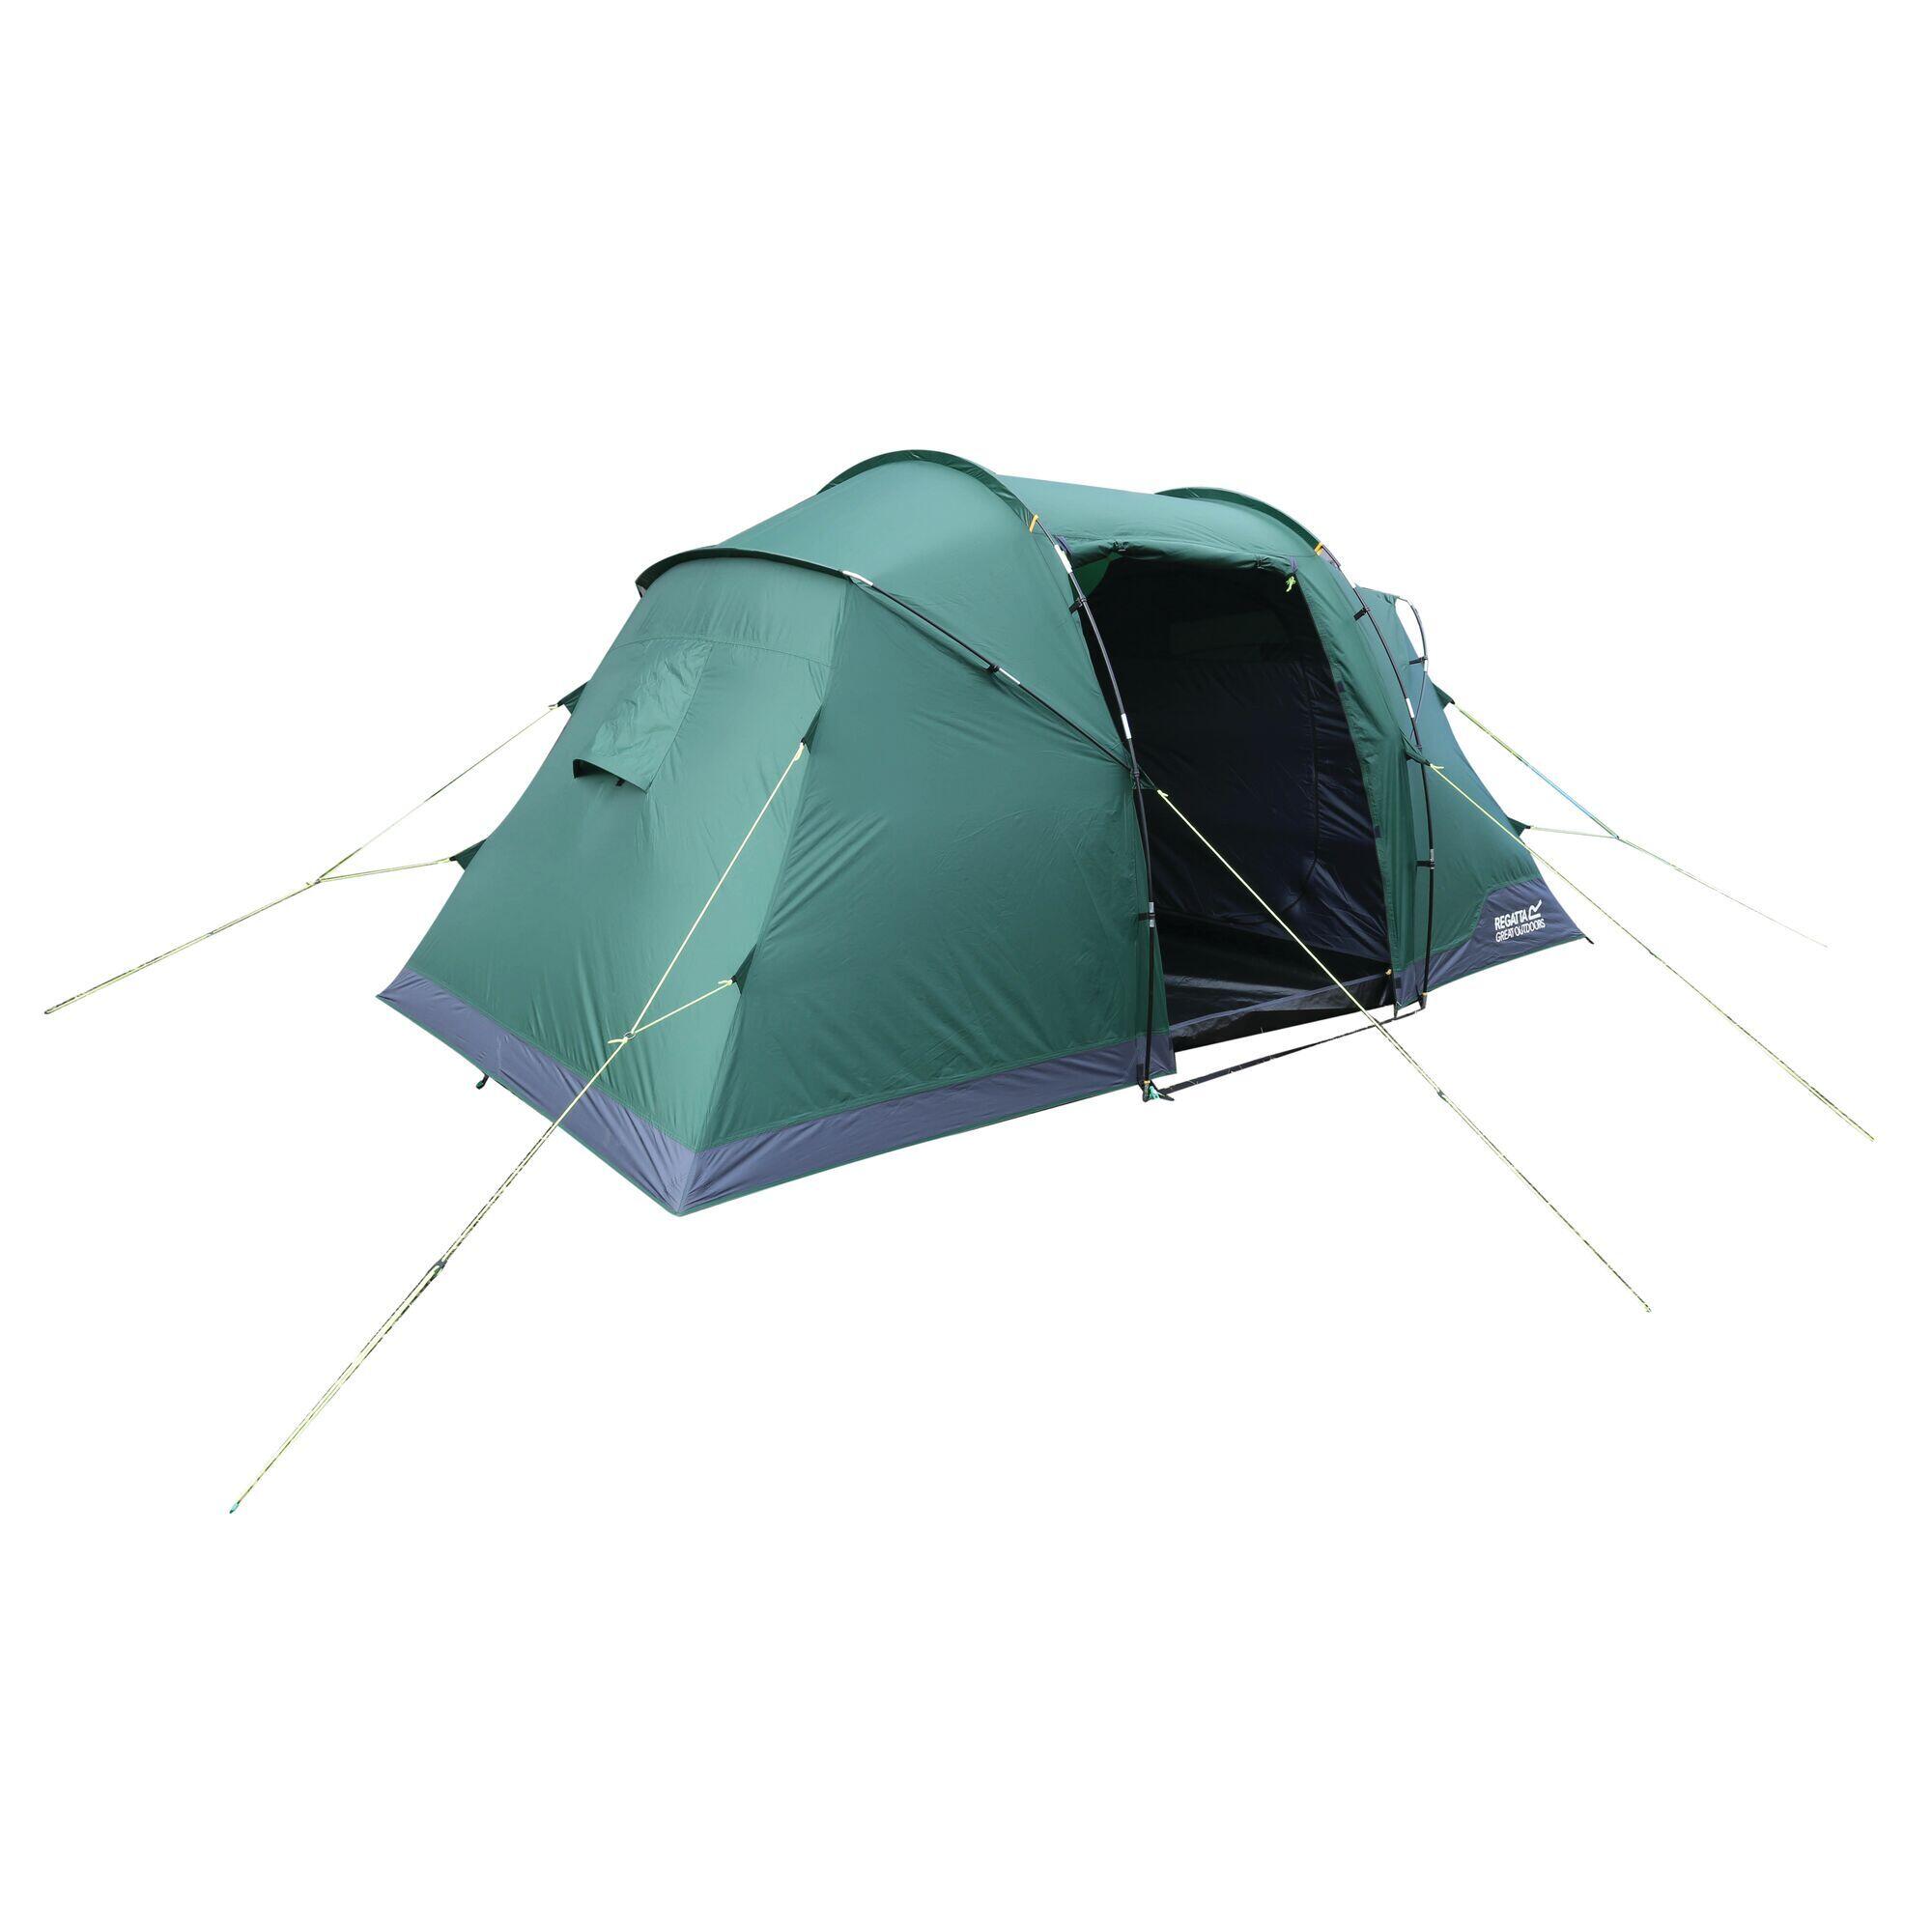 Kivu 4-Man Vis-A-Vis Adults' Camping Tent - Green Pasture 1/5